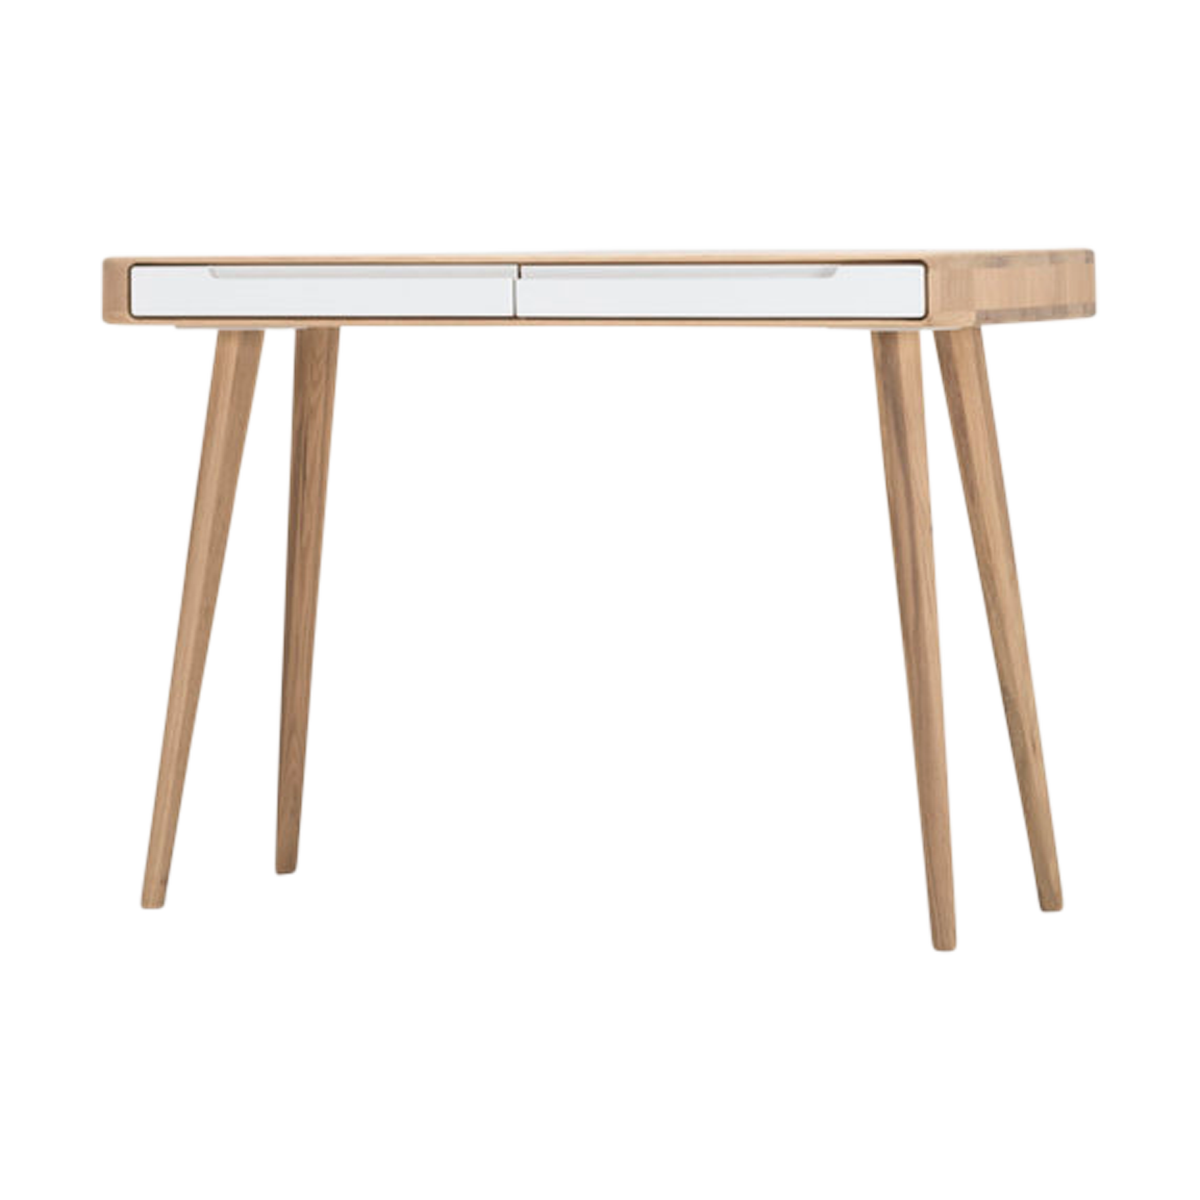 Ena dressing table houten kaptafel whitewash - 110 x 42 cm